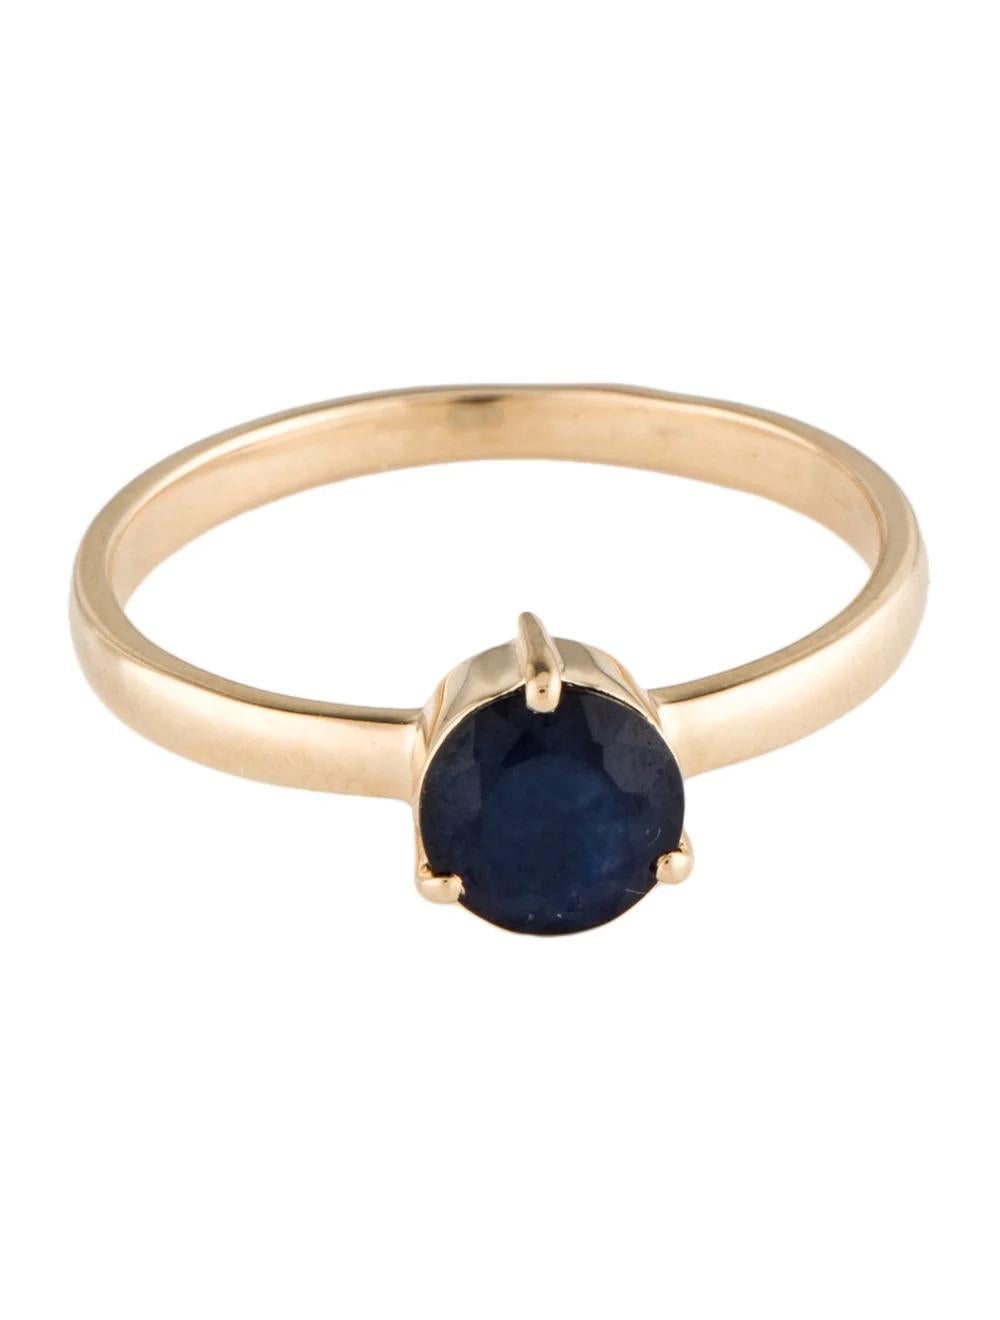 Round Cut 14K Sapphire Cocktail Ring, Size 6.75, Blue Gemstone Jewelry, Designer For Sale